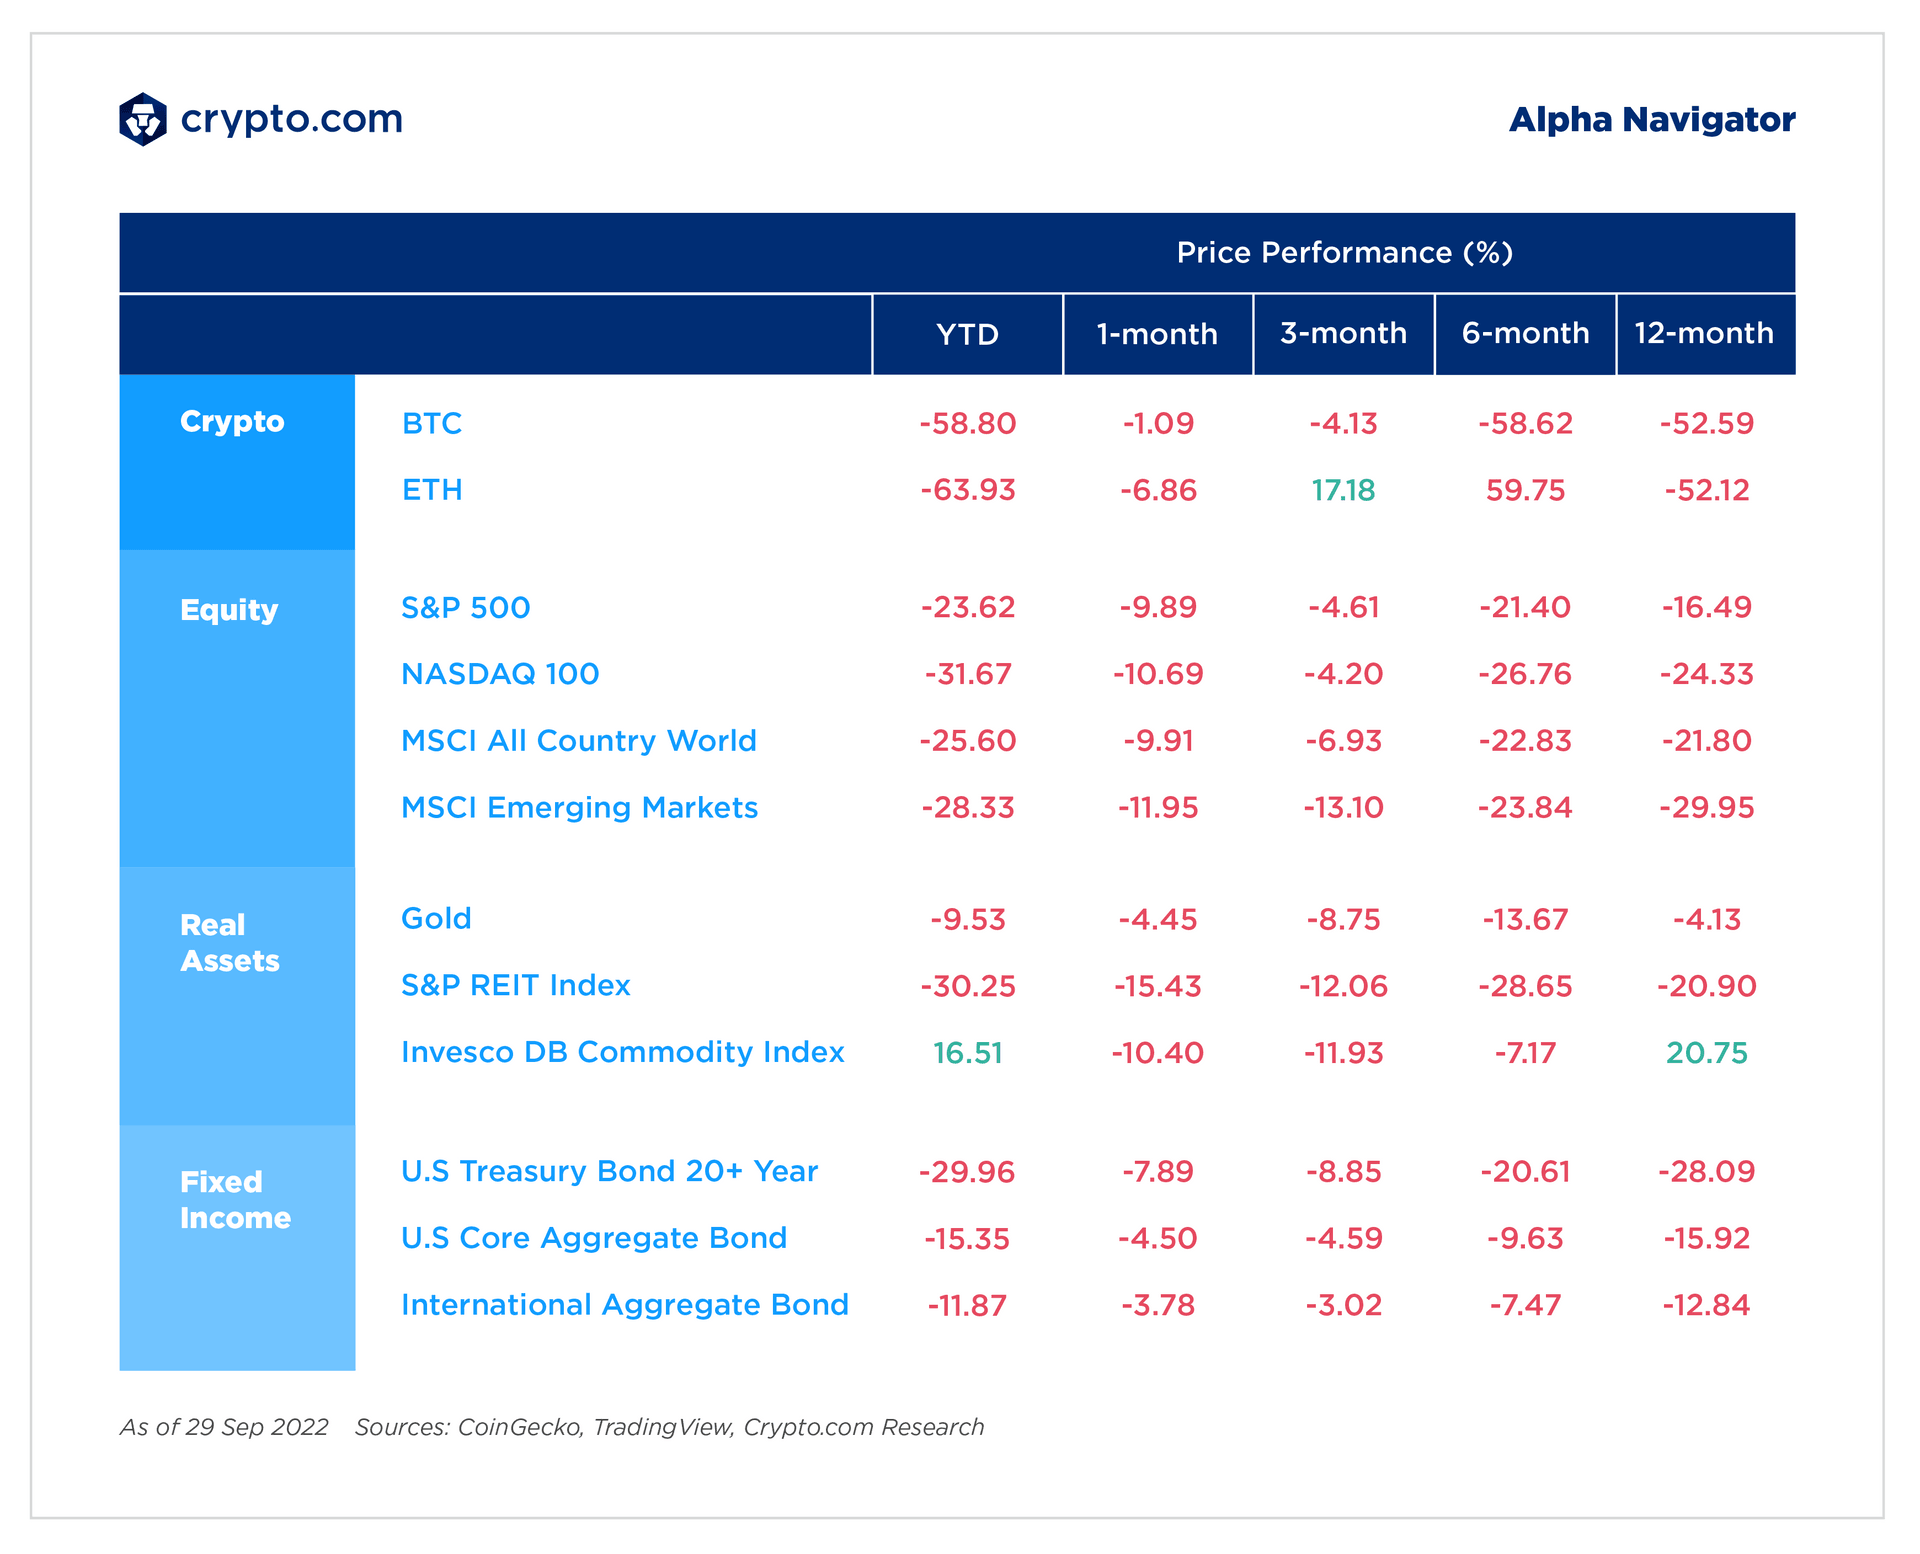 Price Performance table